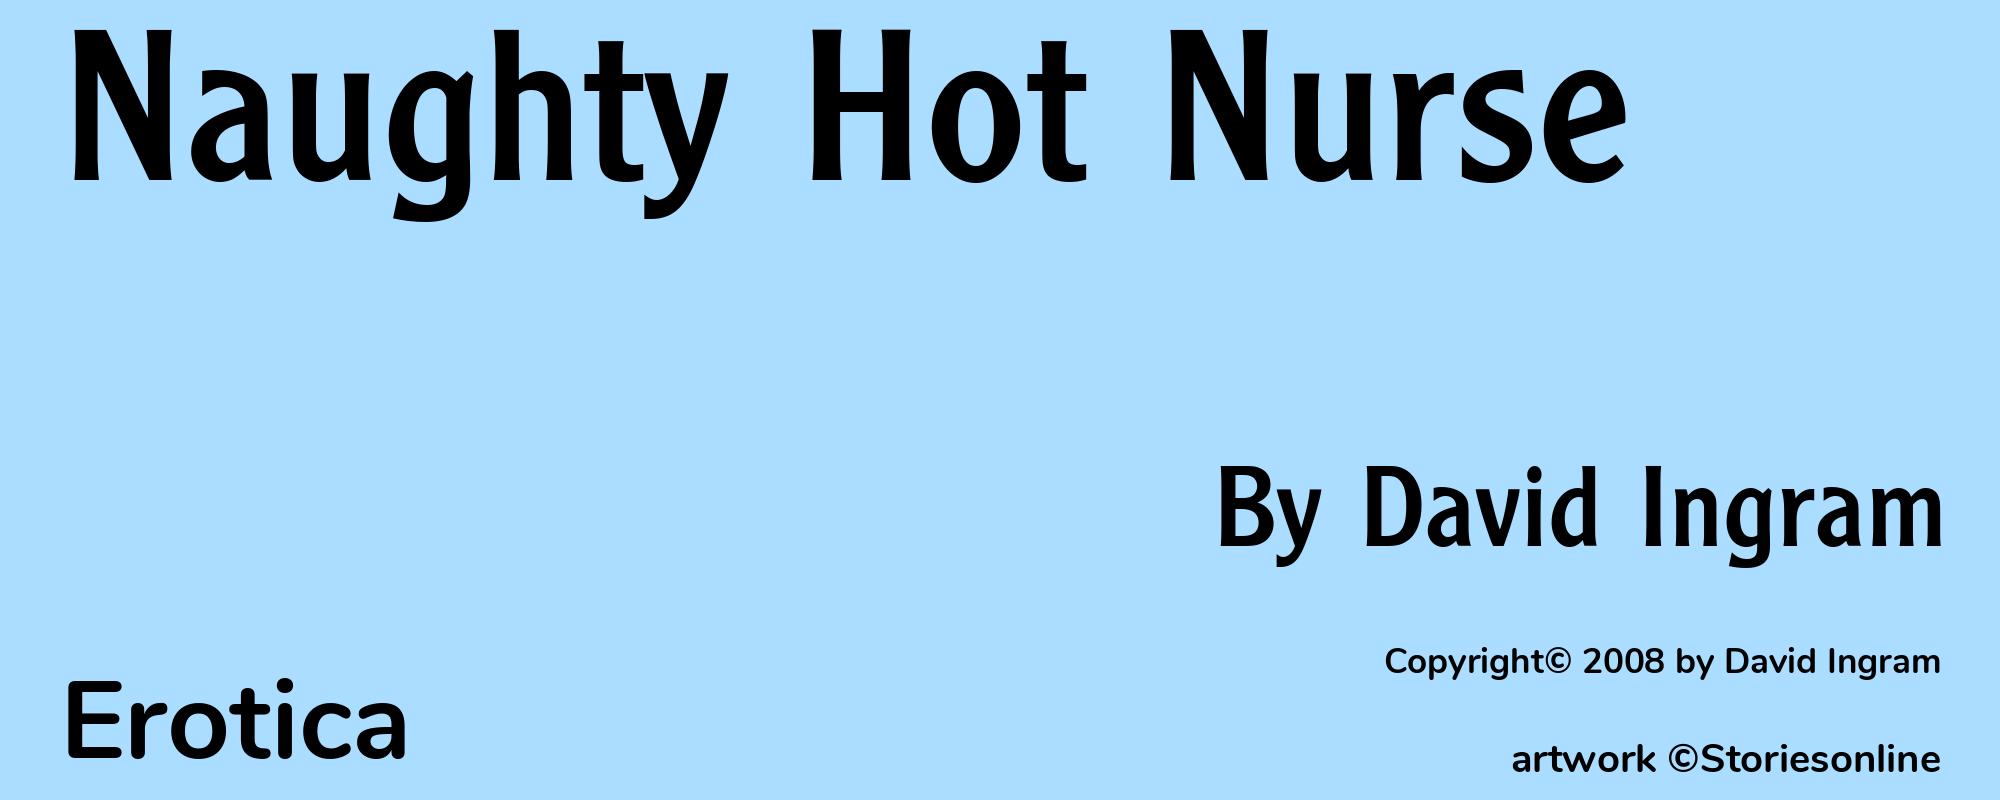 Naughty Hot Nurse - Cover